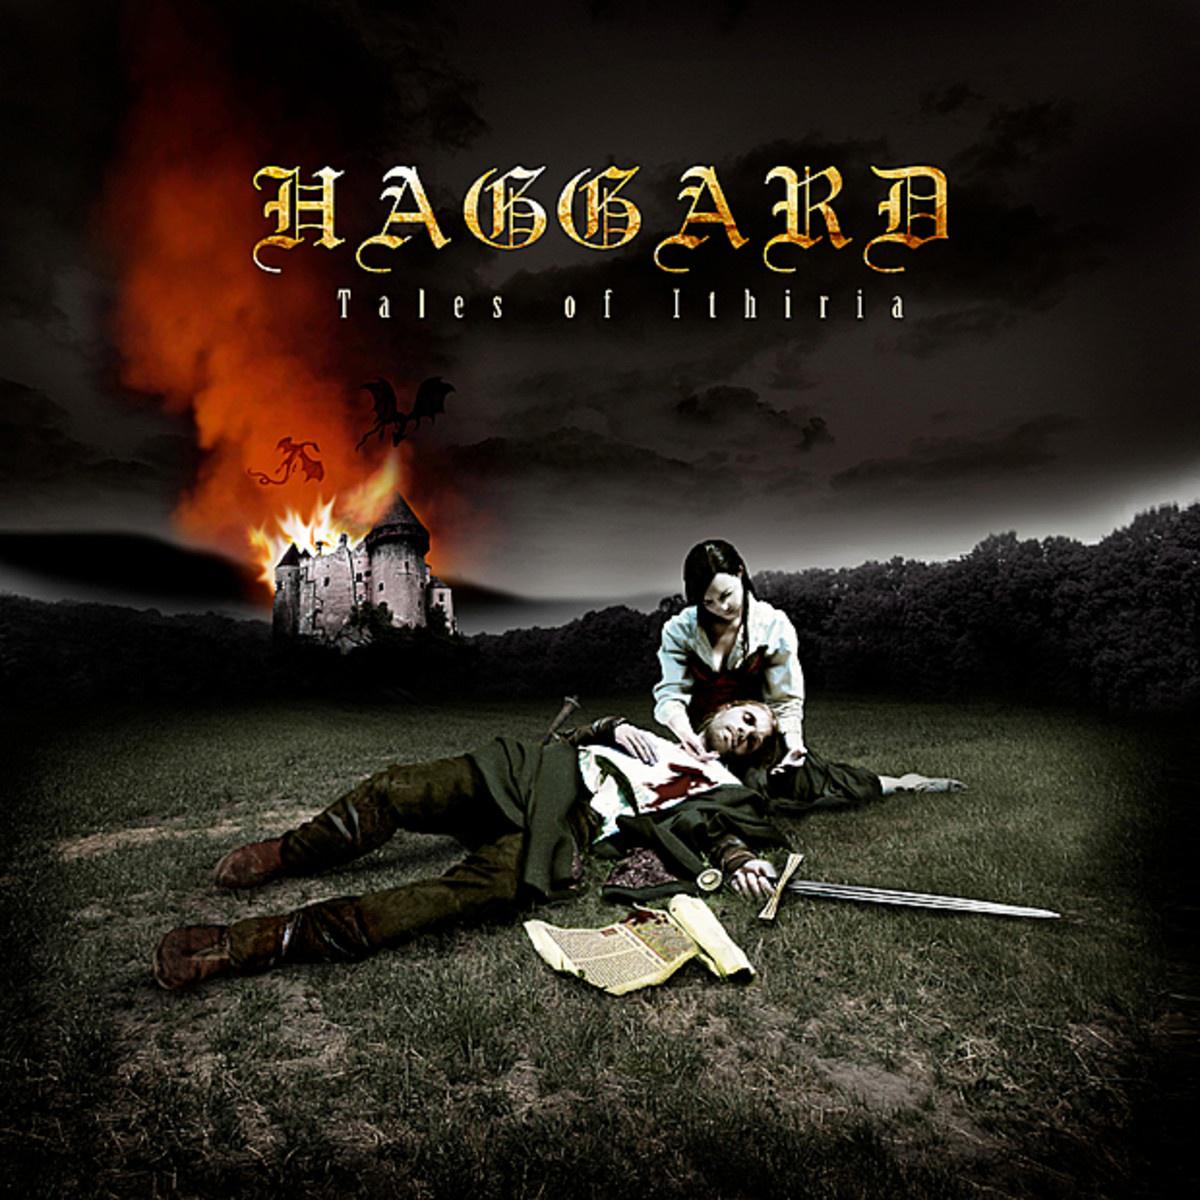 Haggard - Chapter IV: The Sleeping Child